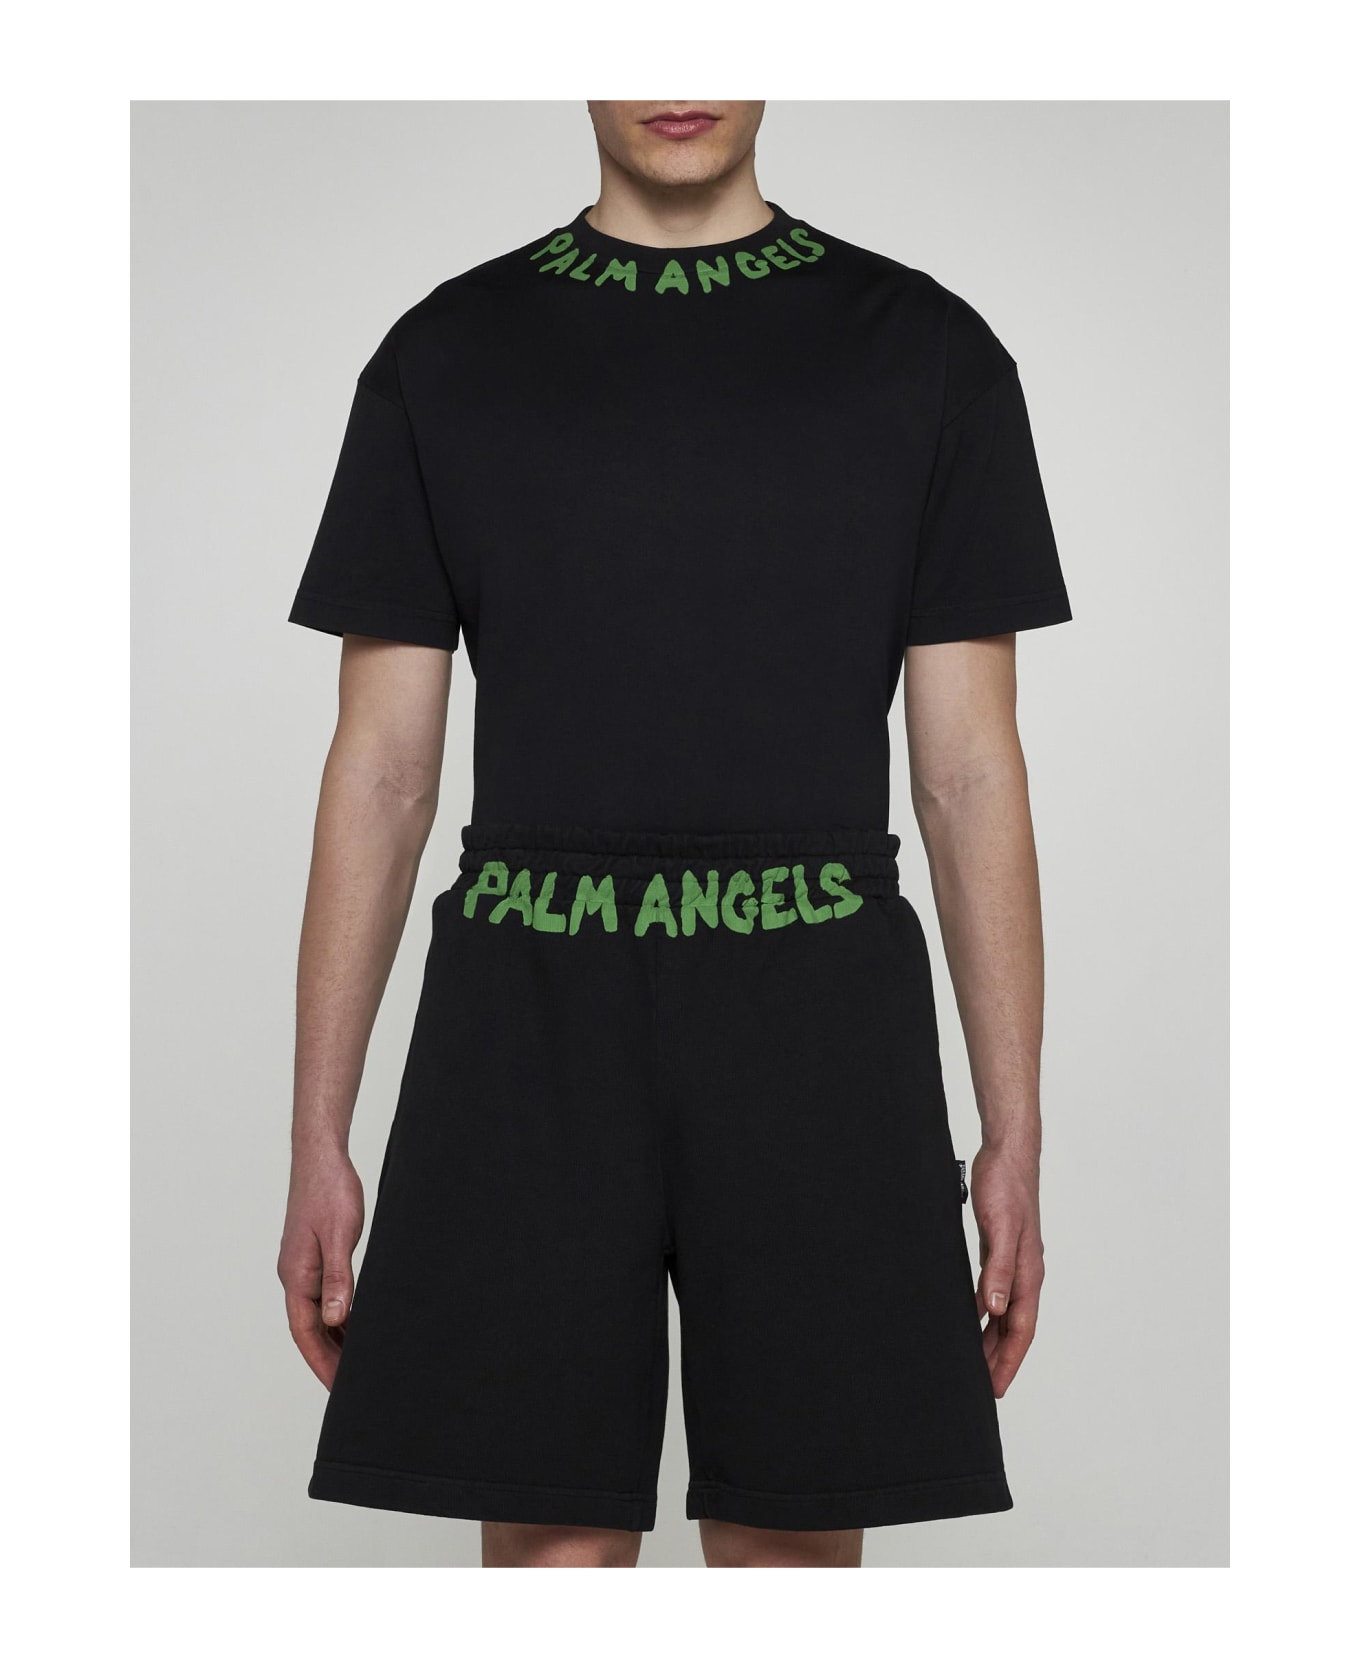 Palm Angels Logo Cotton Sweatshorts - Black green fl ショートパンツ